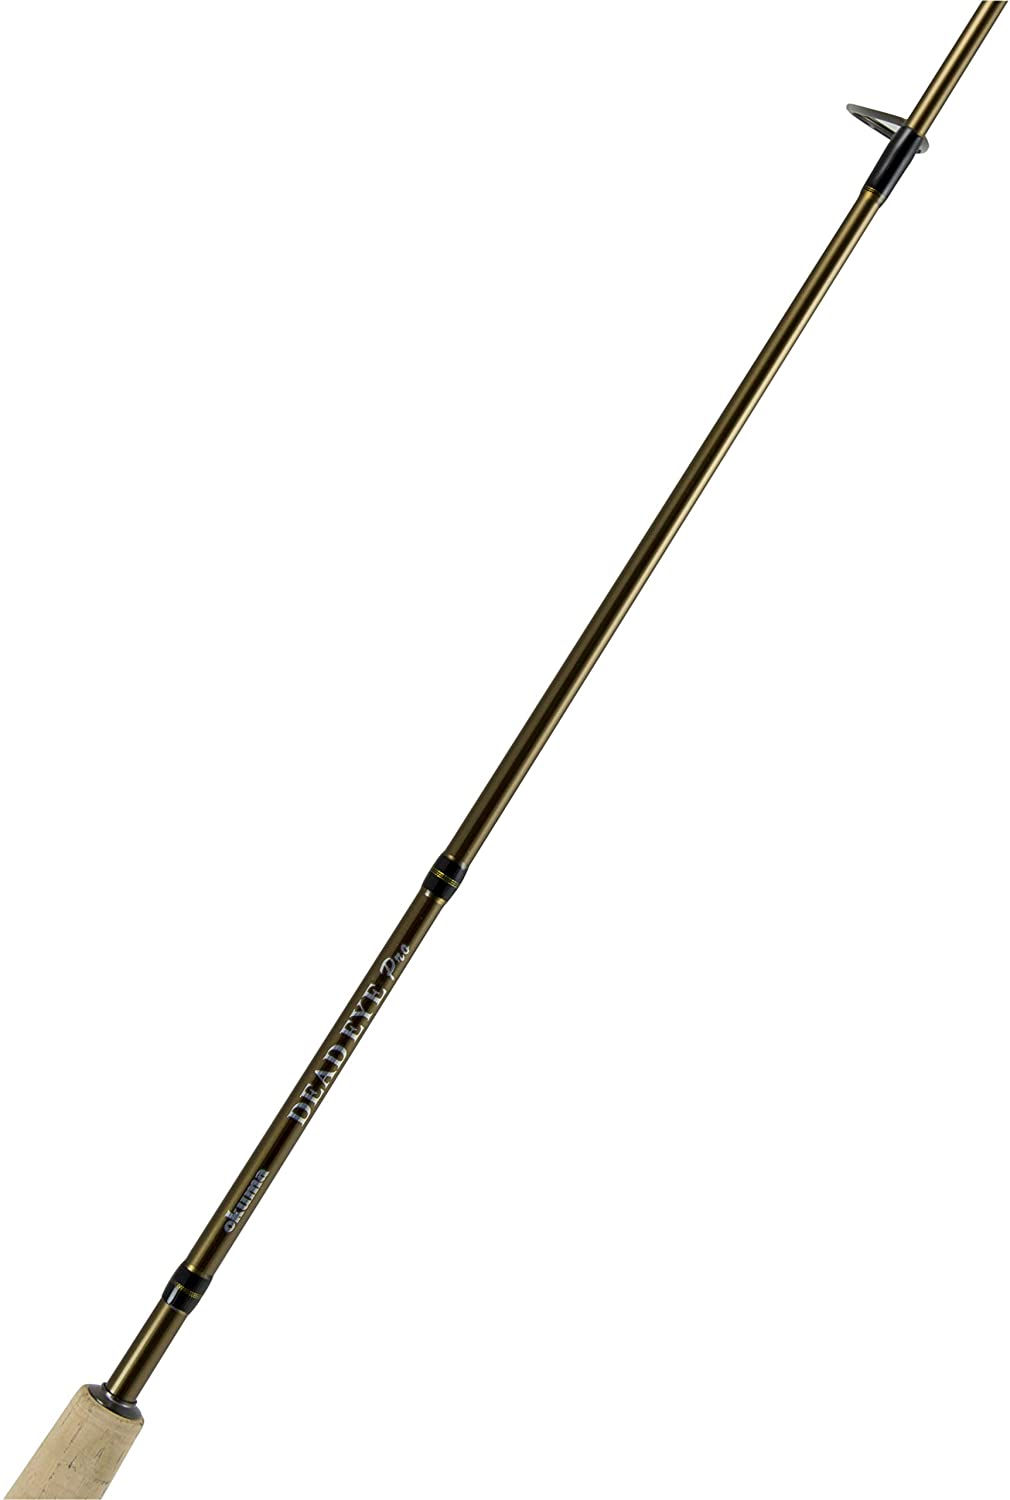 Okuma DEP-S-701MLFT-FG Dead Eye Pro Walleye Rods Spinning, 7' 0", ML